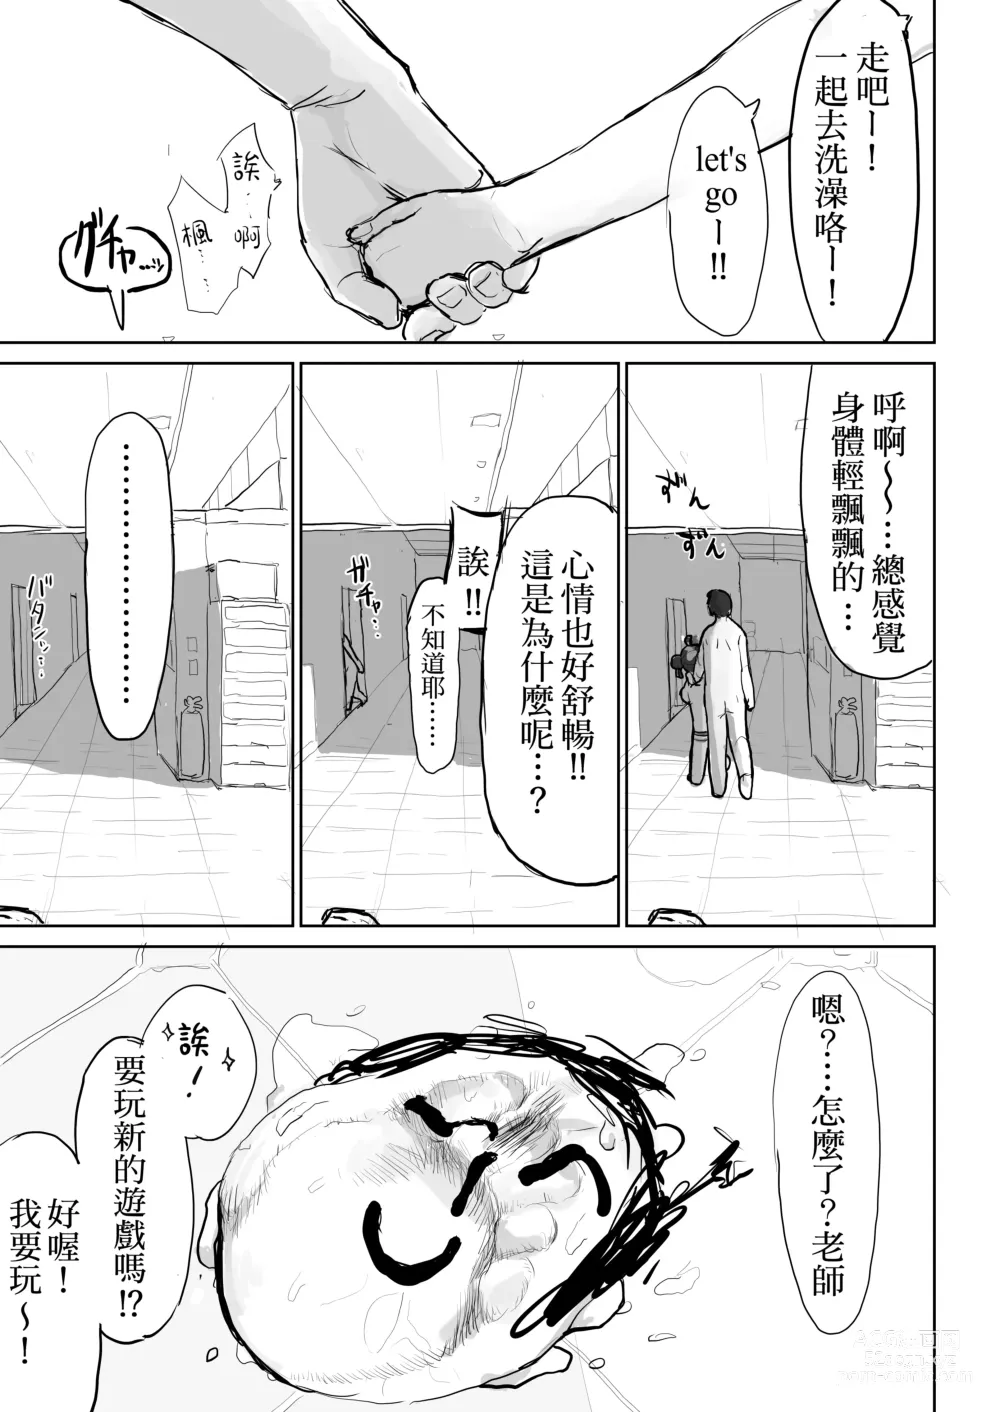 Page 34 of doujinshi 醒过来之前会停手的